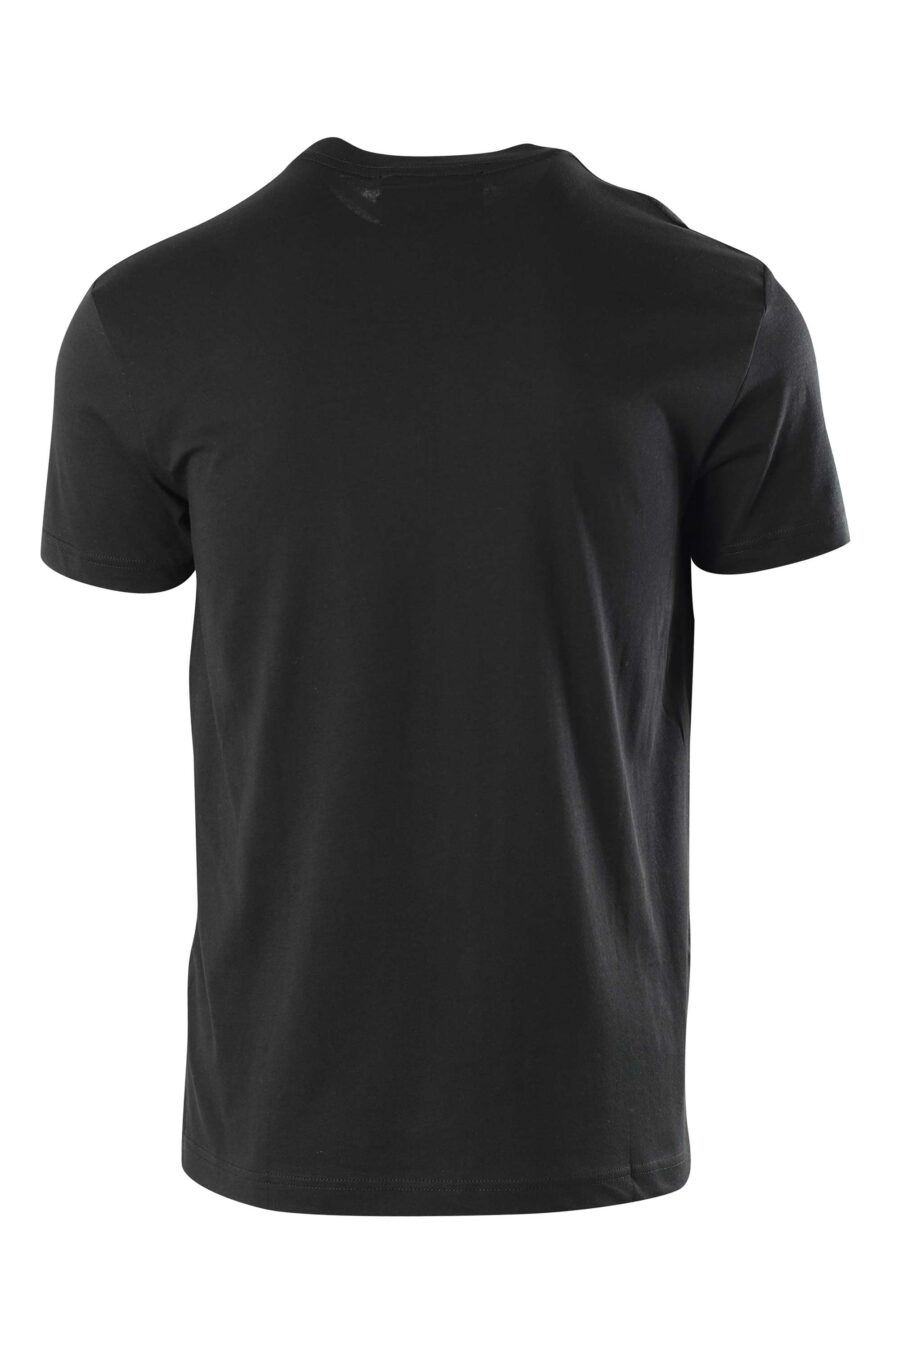 Black T-shirt with logo on collar - 8052019325577 2